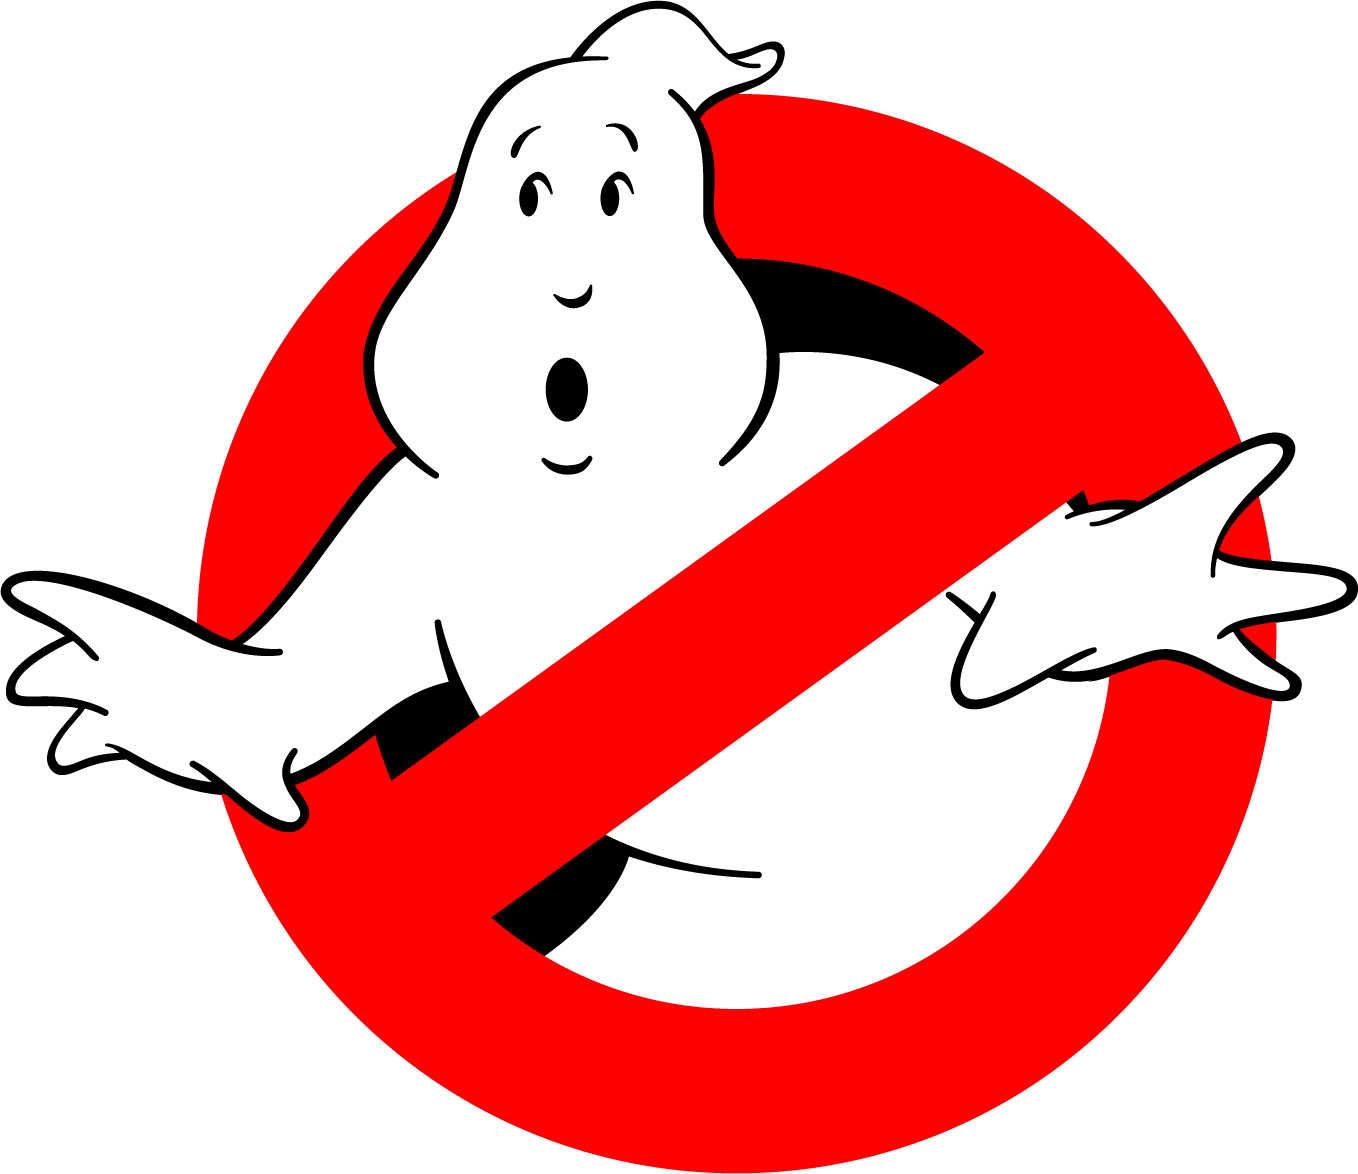 http://4.bp.blogspot.com/-ruJGaa4fA7k/TZ3WqDPVf0I/AAAAAAAAApE/lhcZQ953kl8/s1600/ghostbuster-logo.jpg